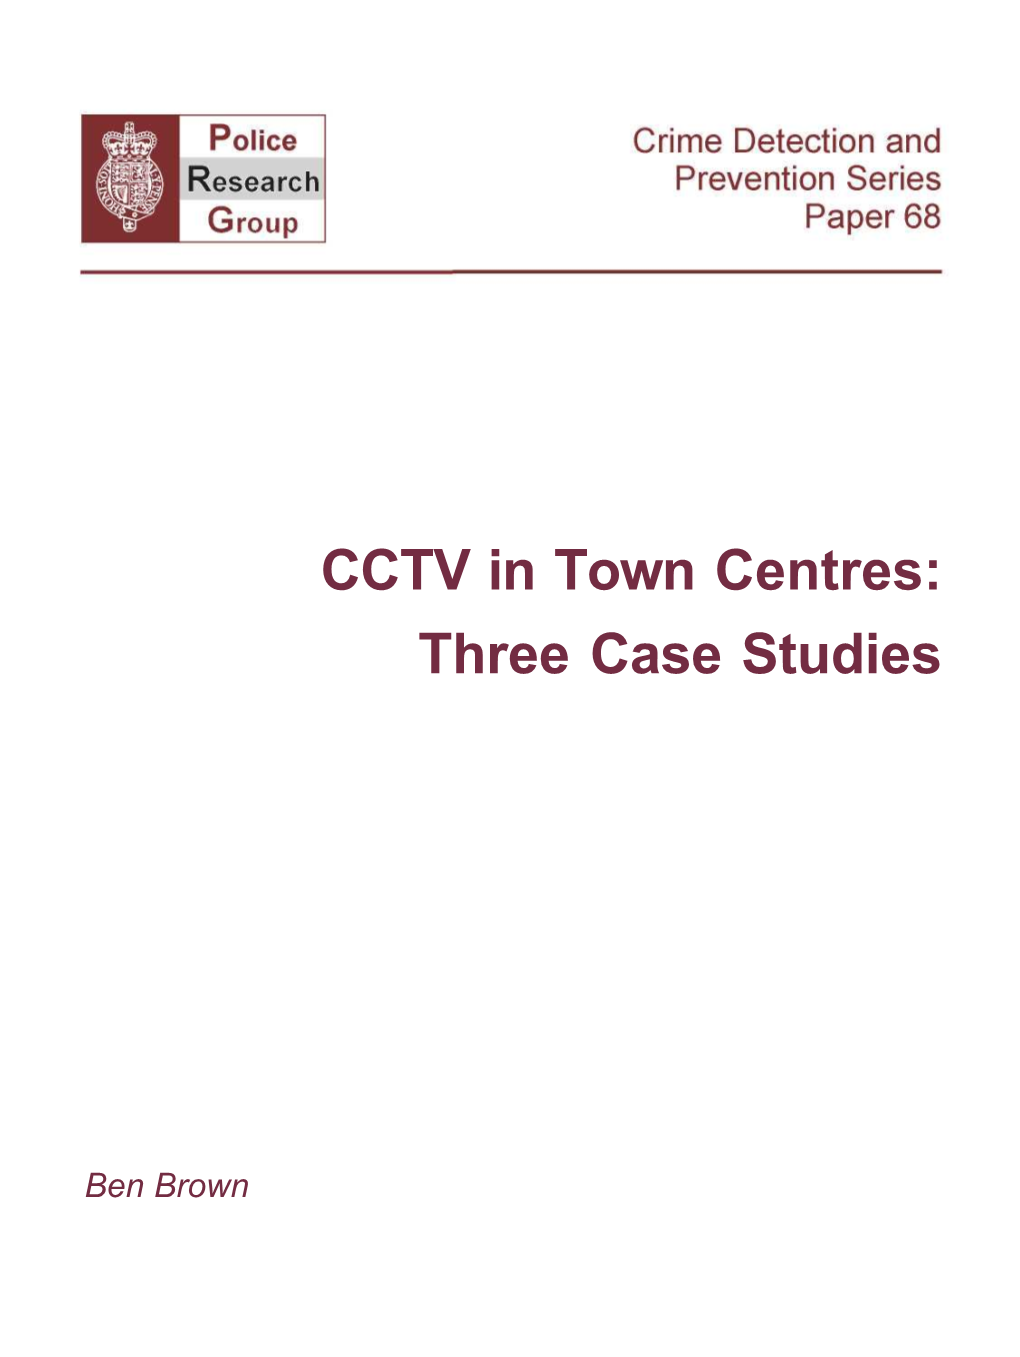 CCTV in Town Centres: Three Case Studies